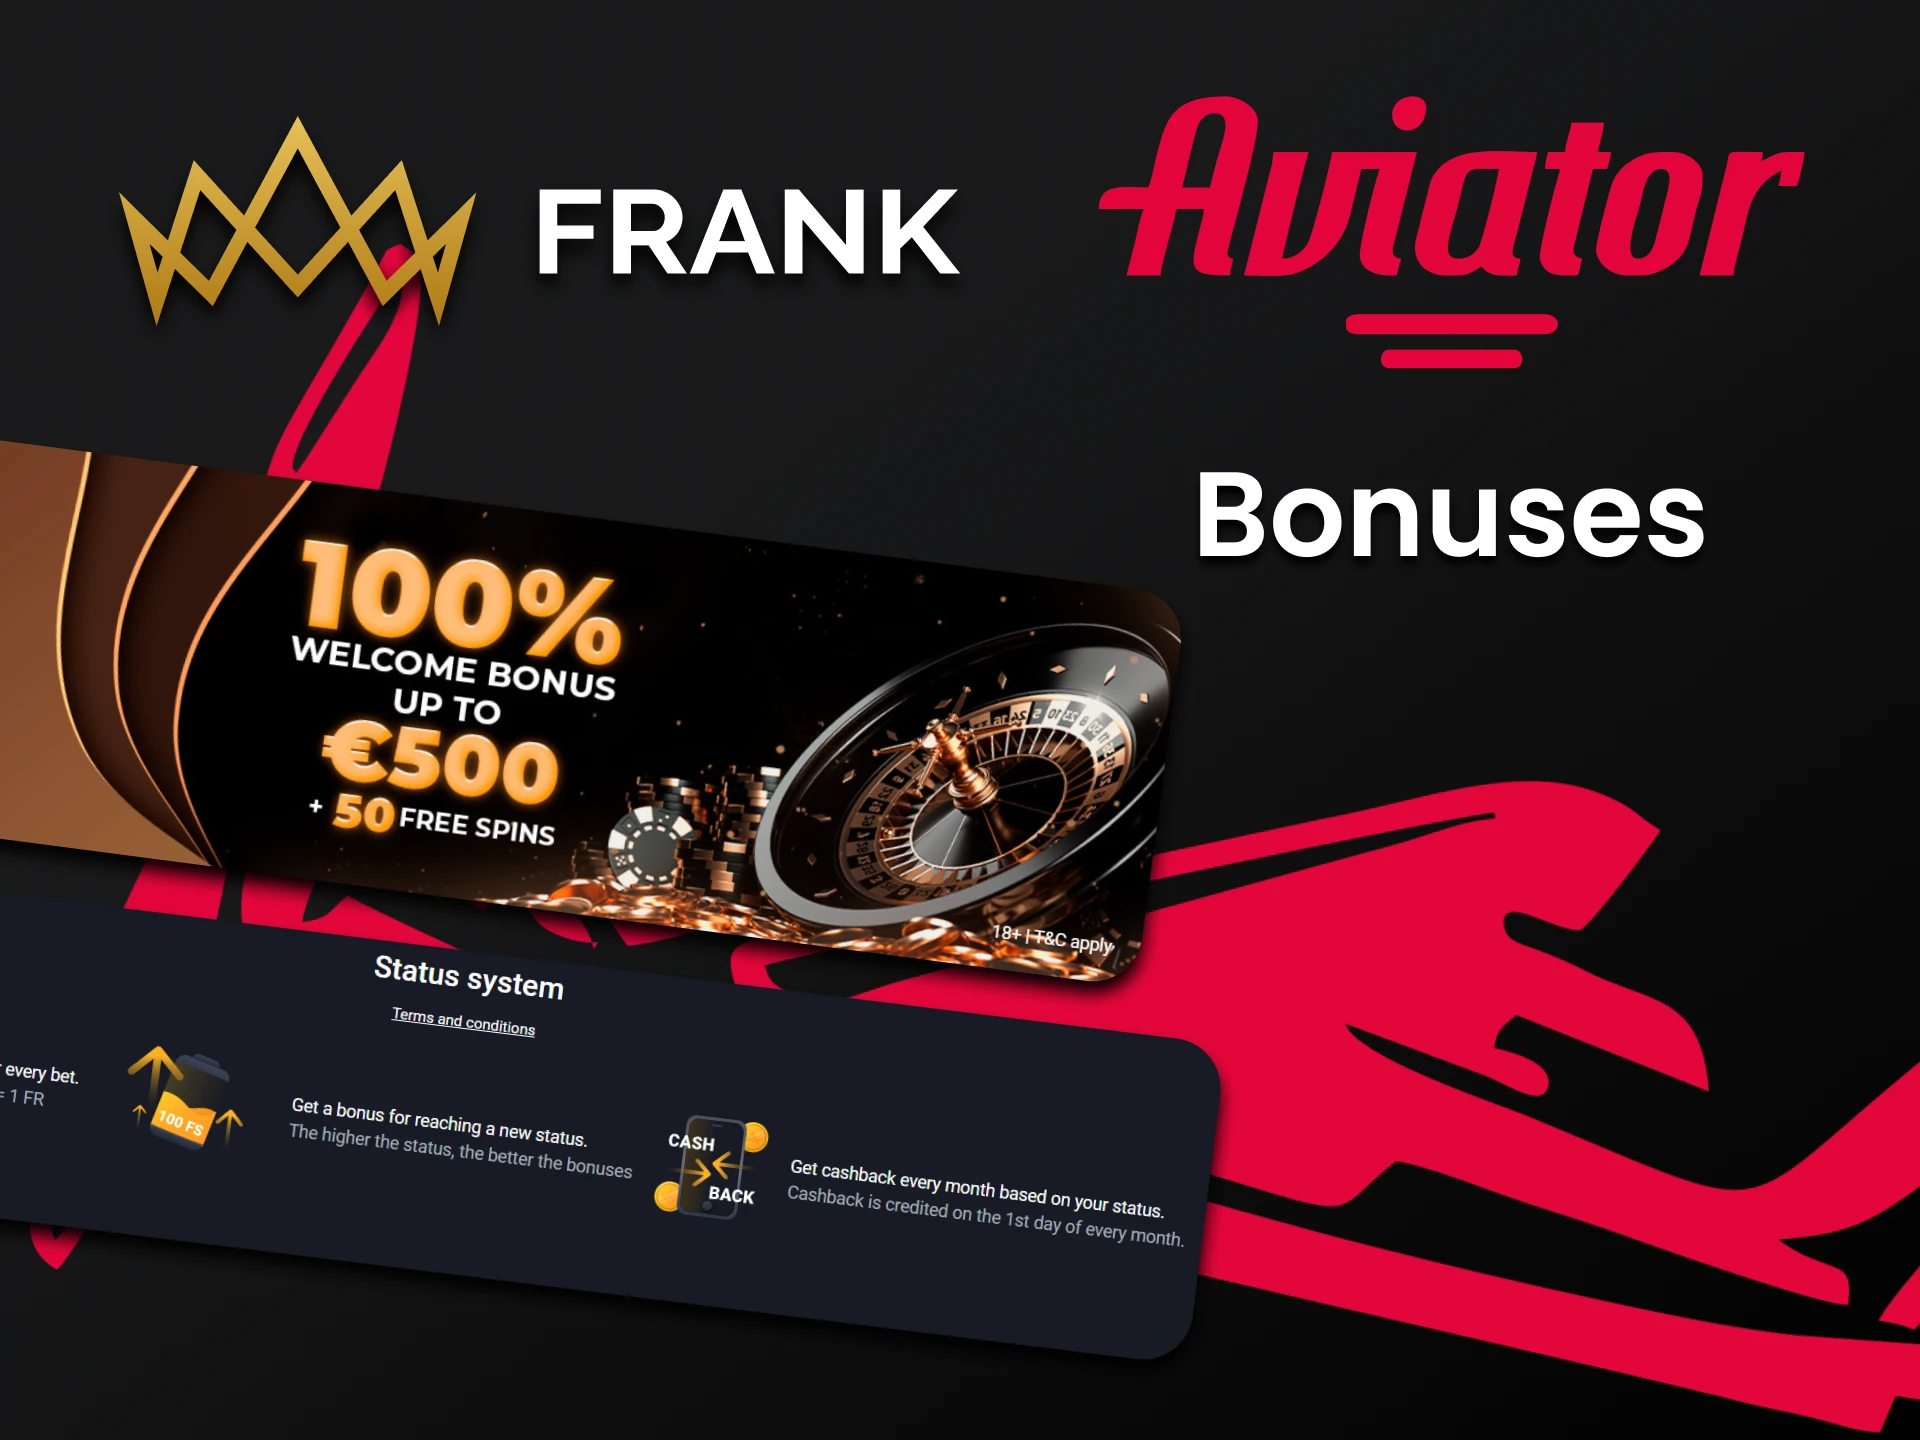 Frank Casino gives bonuses for the Aviator game.